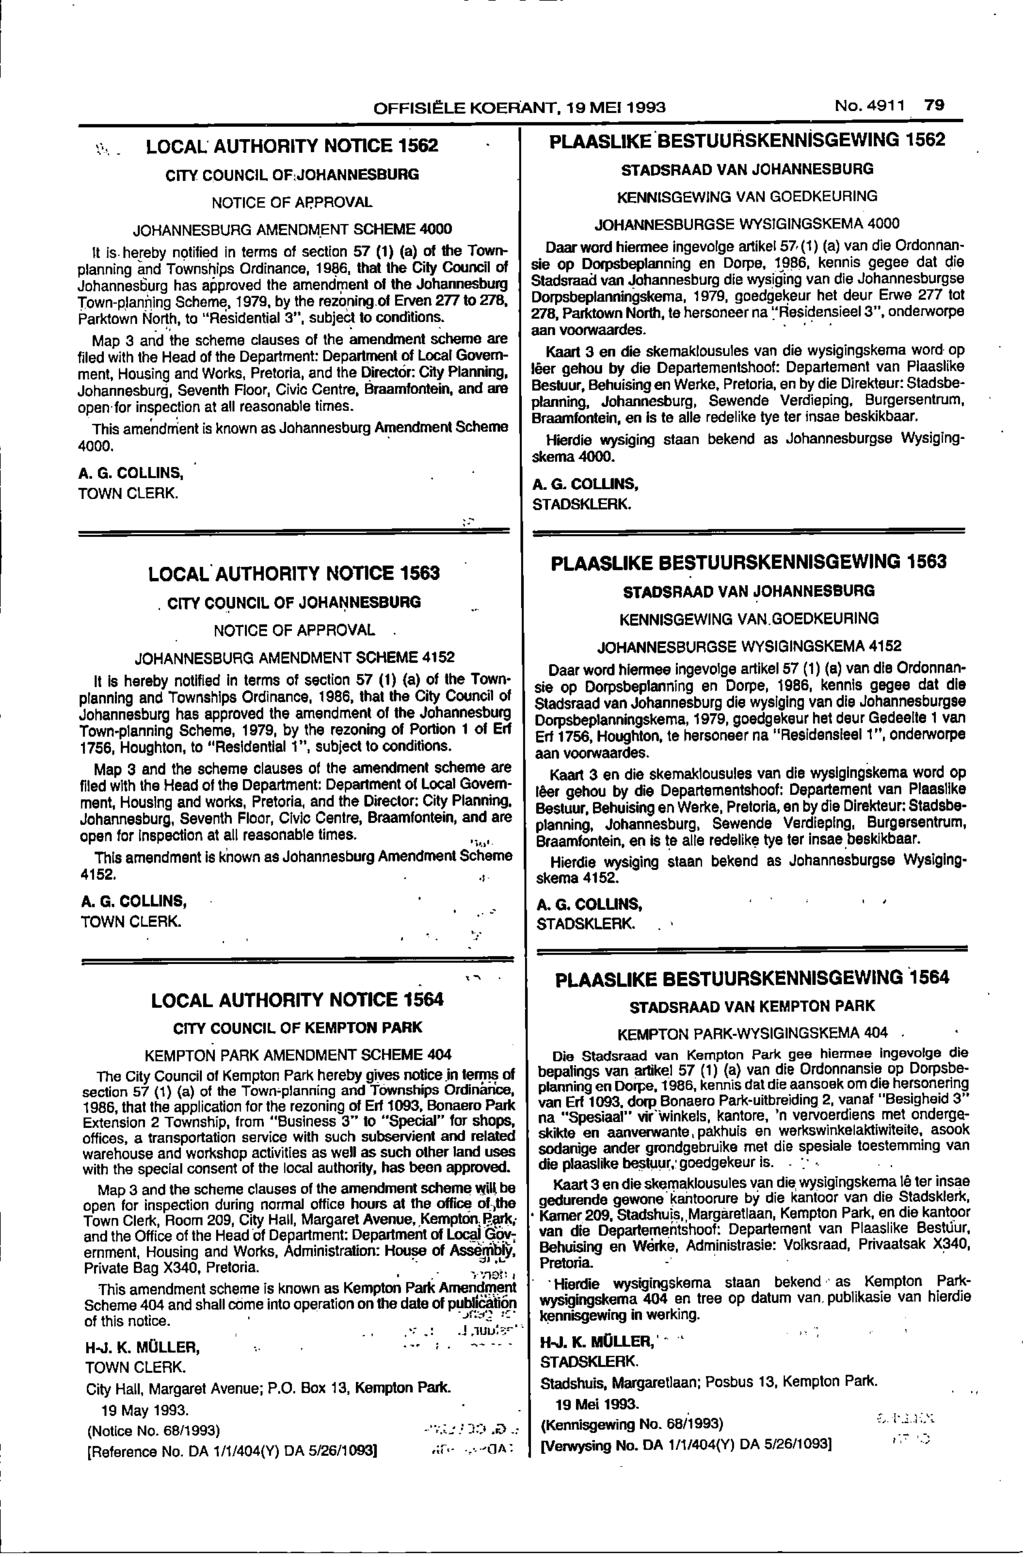 1 OFFISIELE KOERANT 19 MEI 1993 No4911 79 LOCAL AUTHORITY NOTICE 1562 CITY COUNCIL OFJOHANNESBURG NOTICE OF APPROVAL PLAASLIKE BESTUURSKENNISGEWING 1562 STADSRAAD VAN JOHANNESBURG KENNISGEWING VAN